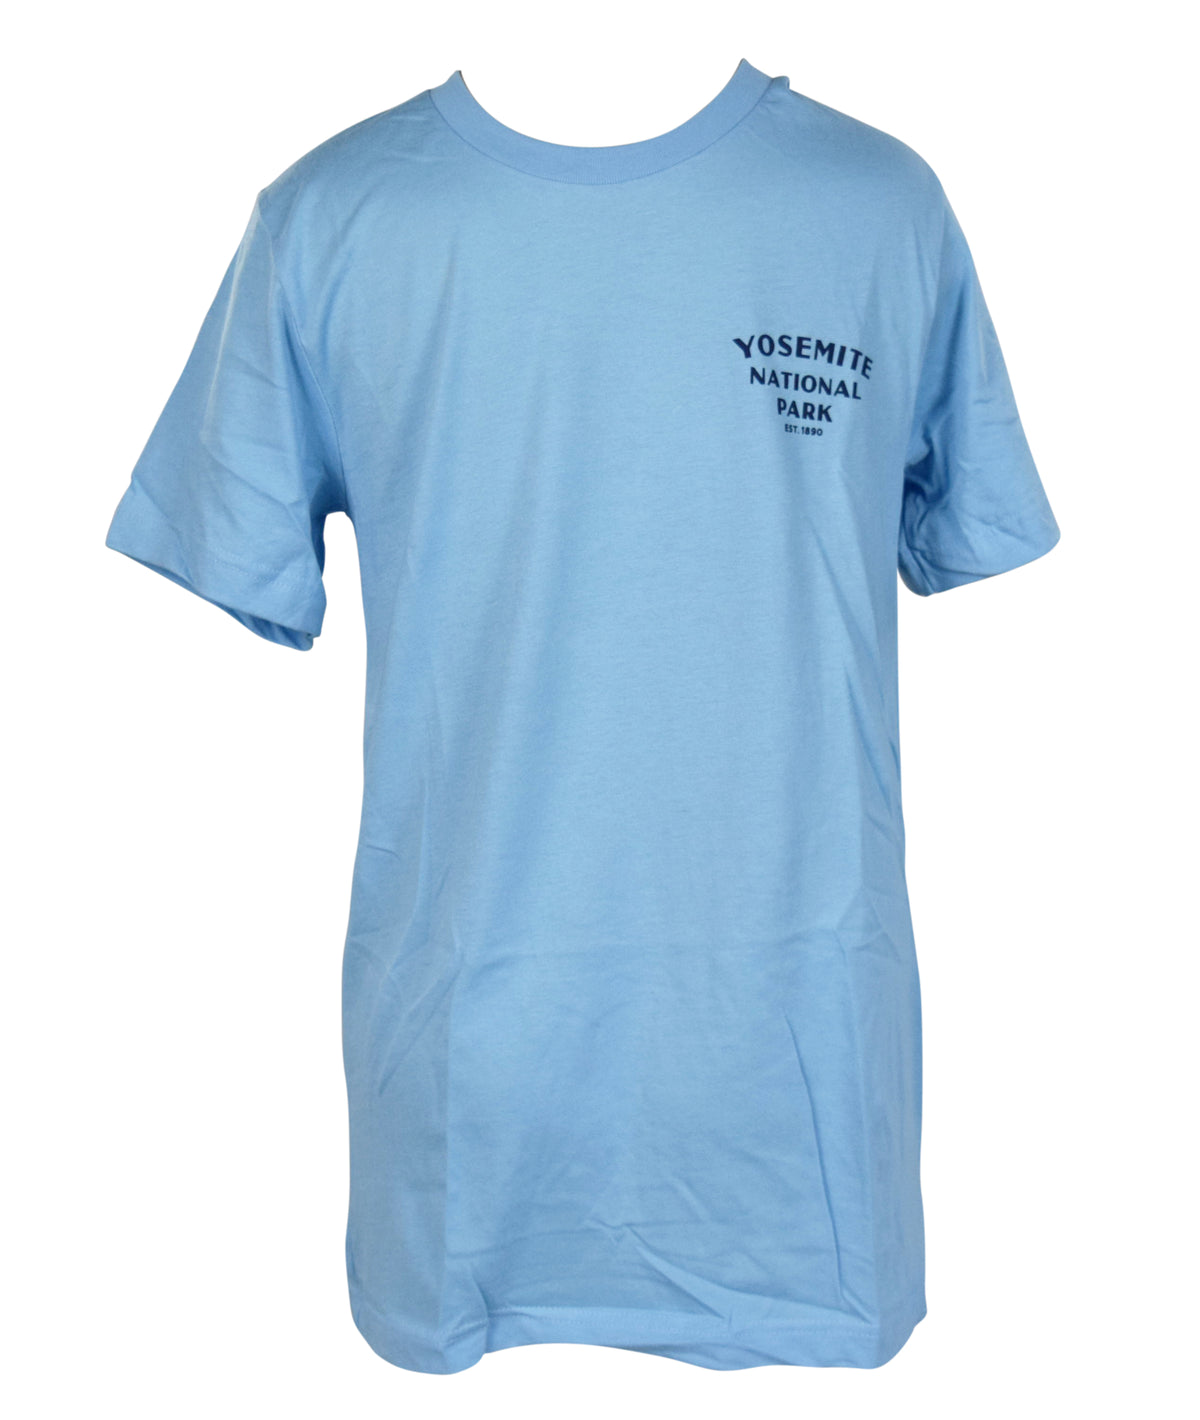 Sendero Provisions Co. Yosemite National Park "Ocean" T-Shirt (M)